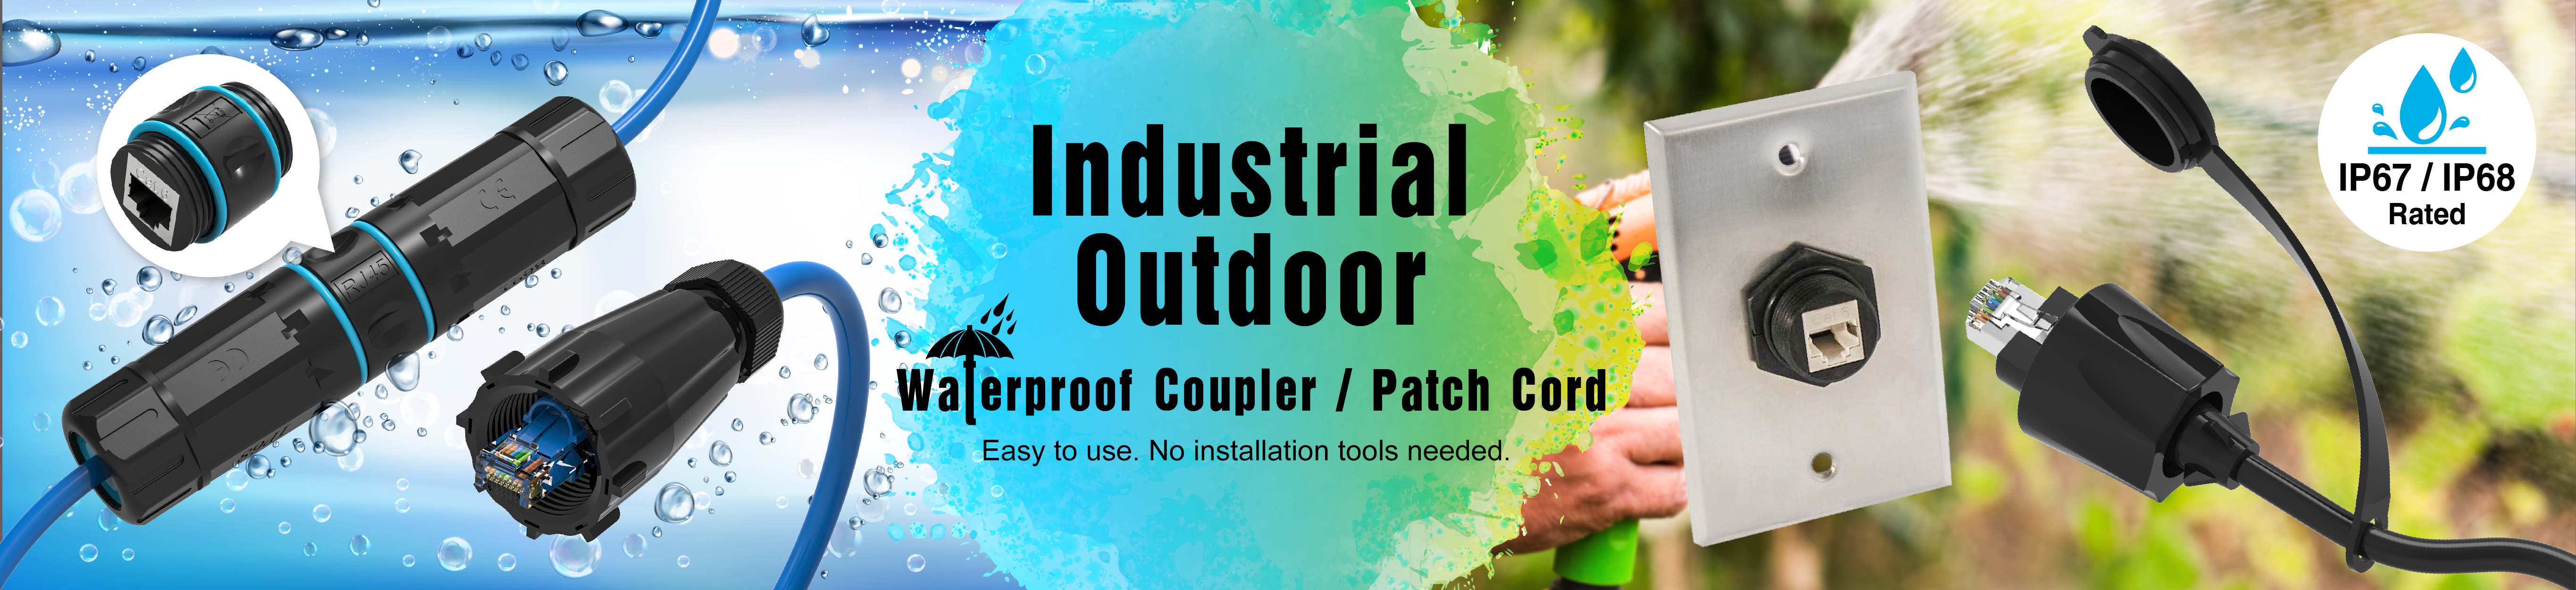 Outdoor Waterproof Products